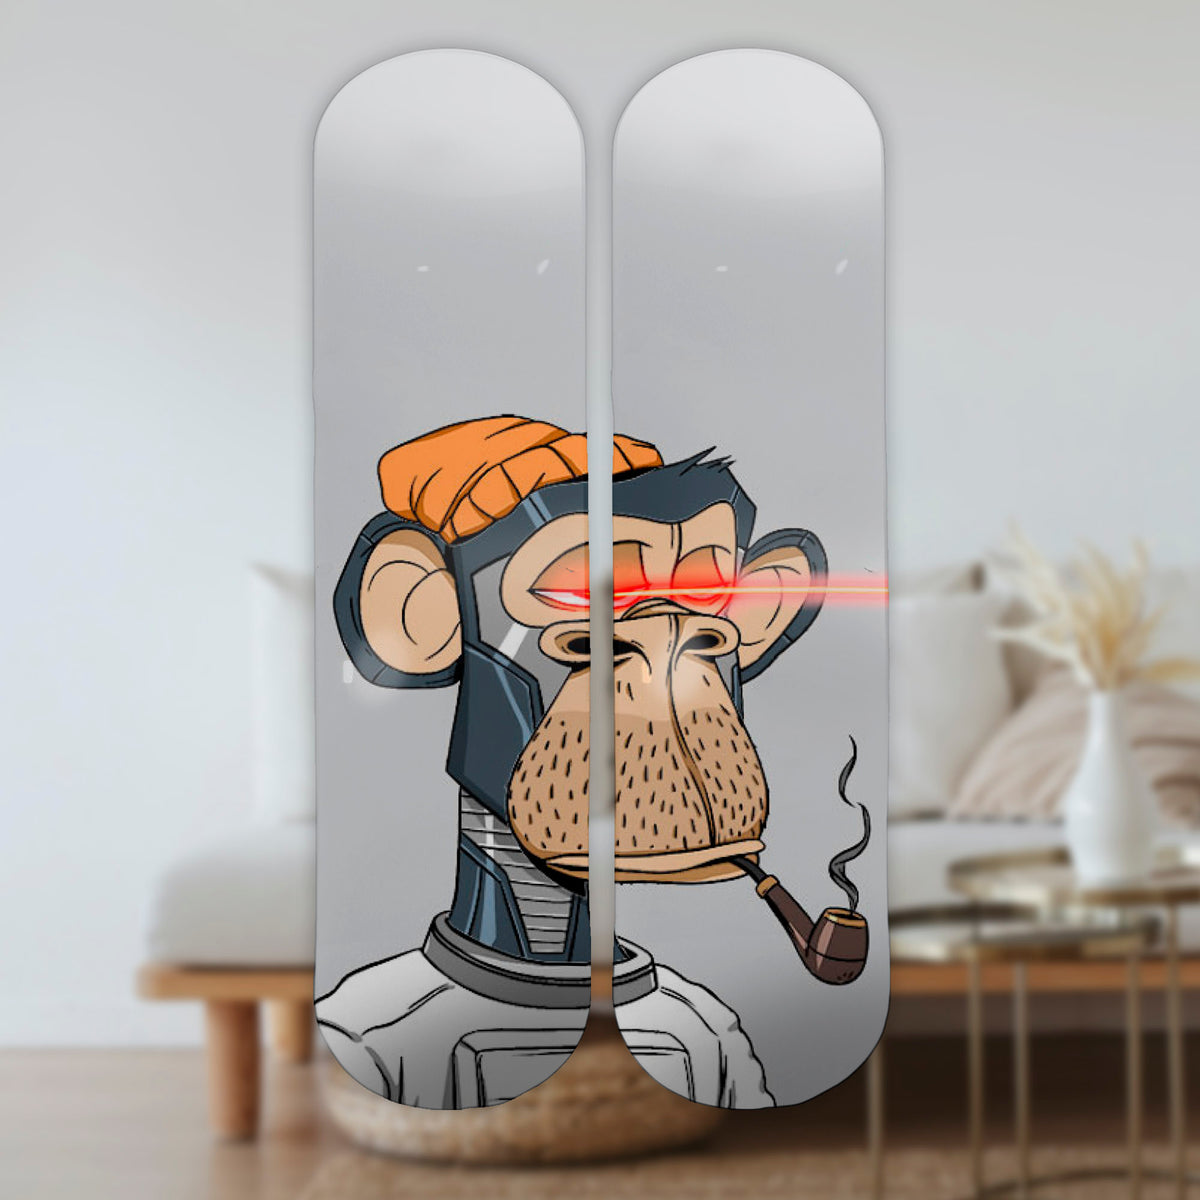 Wall Art of Not So Boring Chimp Skateboard Design in Acrylic Glass - Pop Art